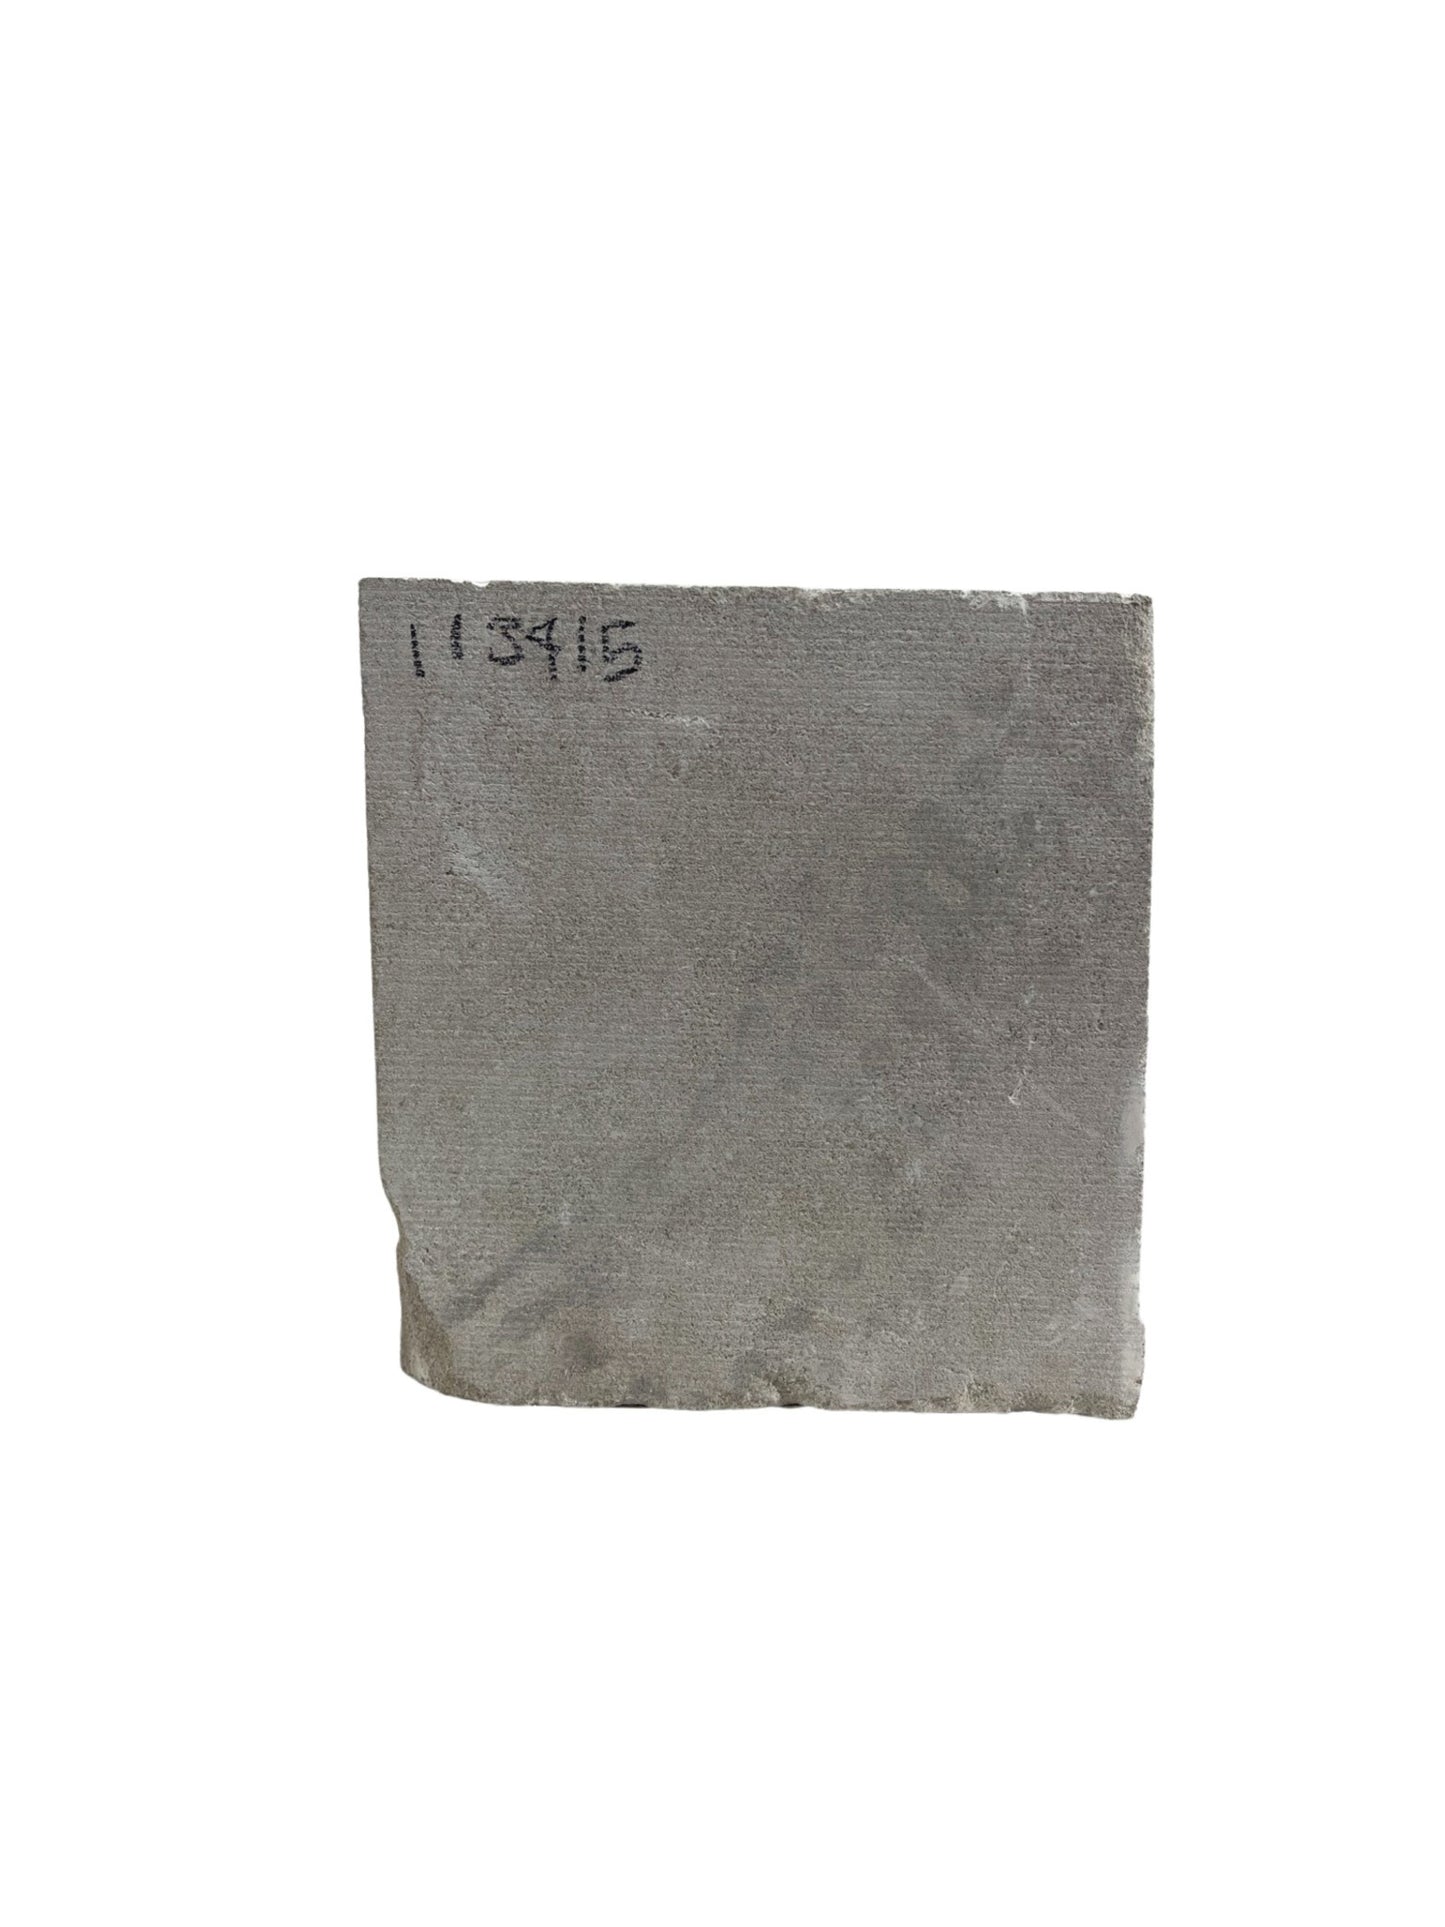 Indiana Limestone 15x15x2 #113415